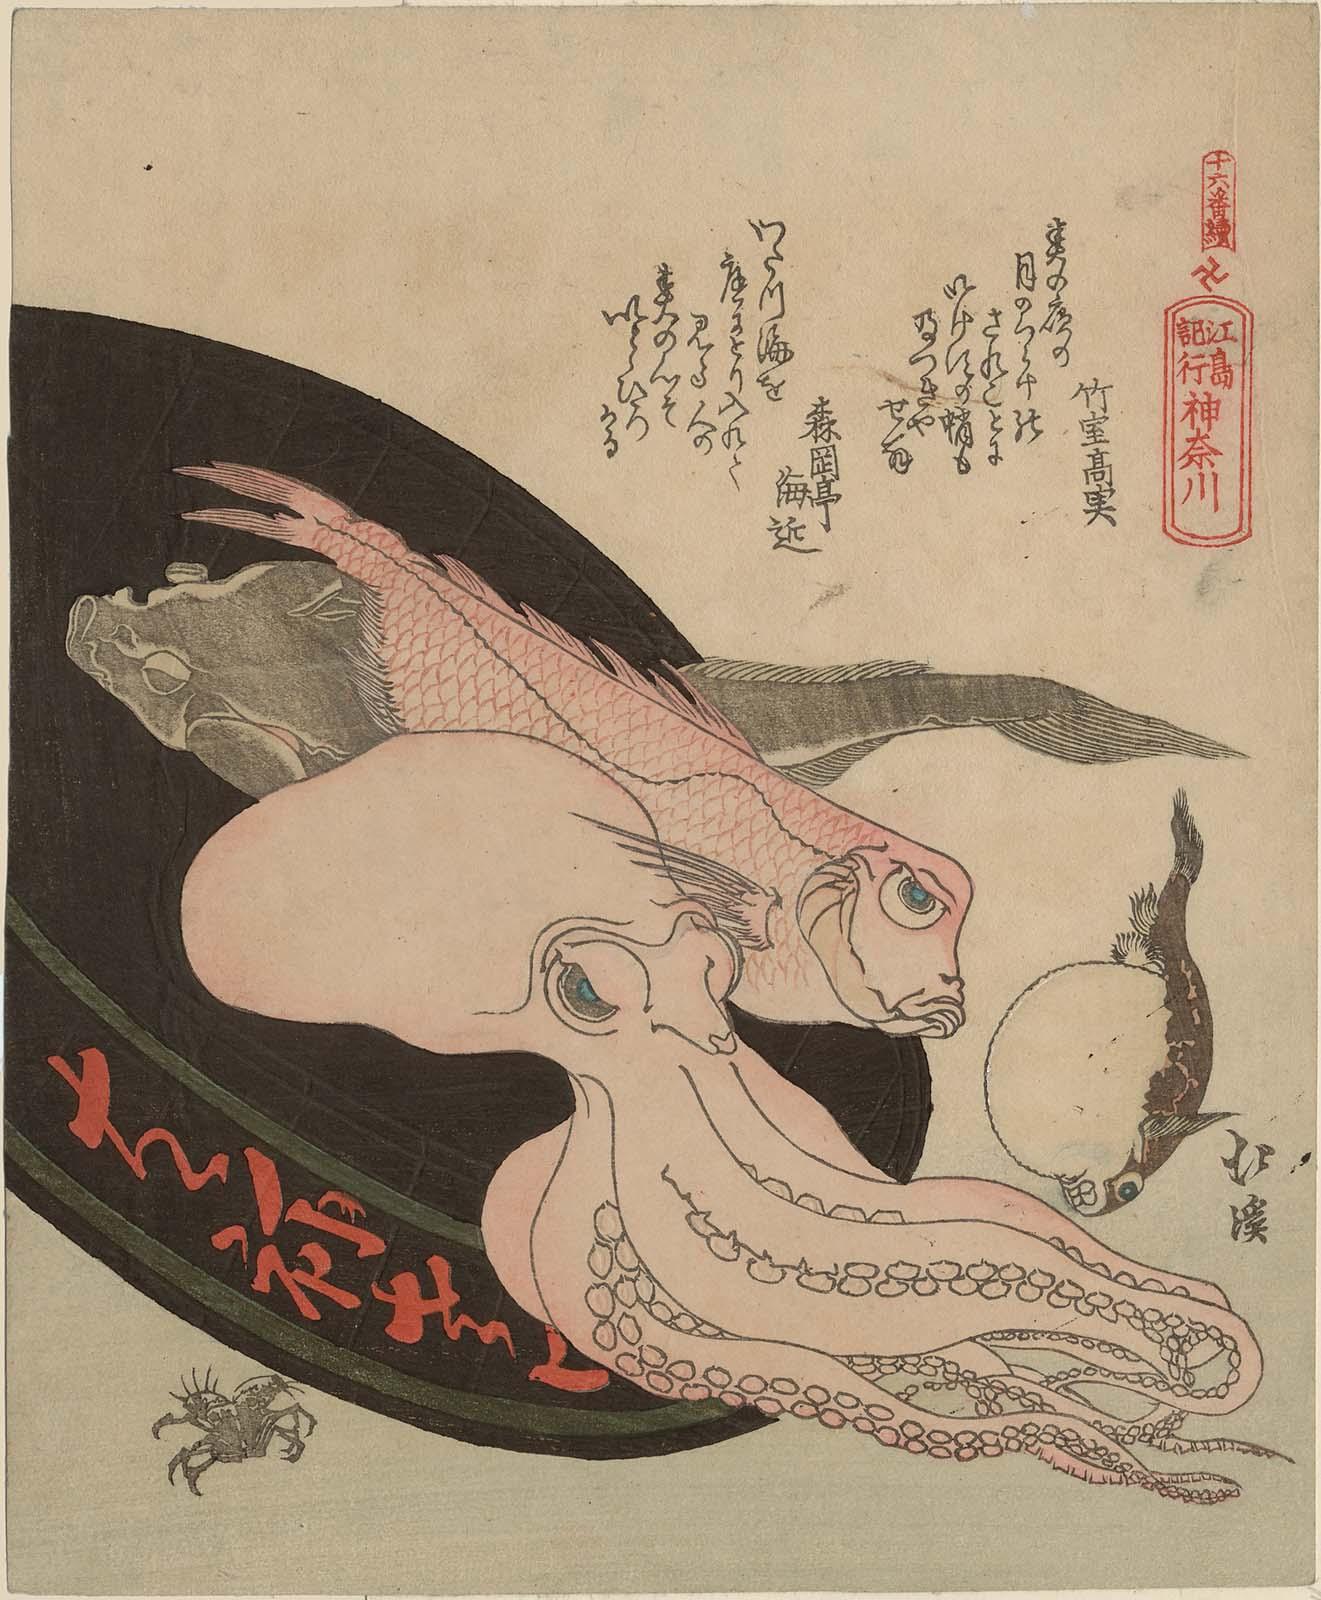 Kanagawa, from the series Souvenirs of Enoshima, a Set of Sixteen